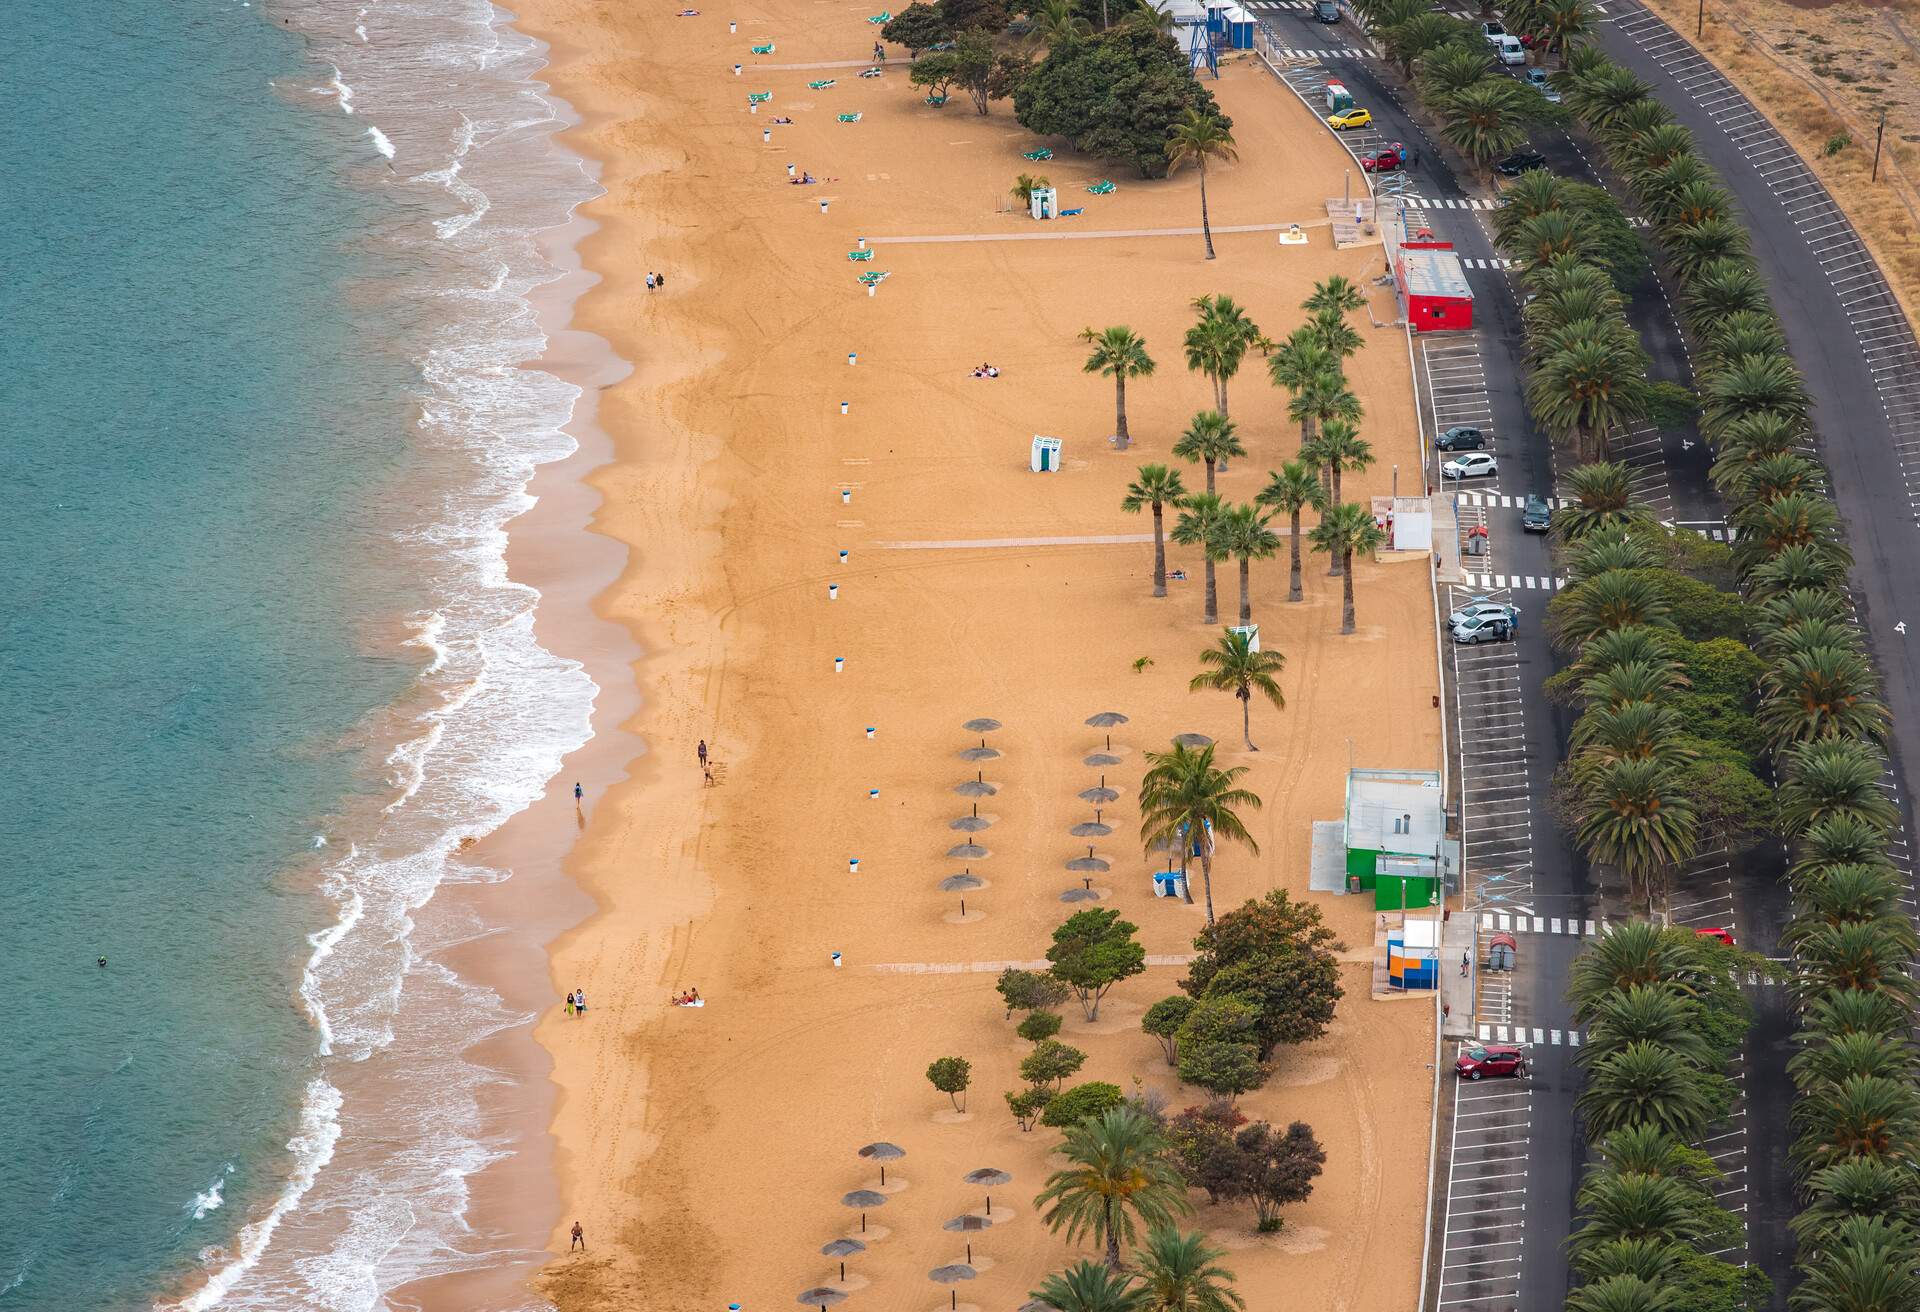 Aerial view of Playa de Las Teresitas beach in Tenerife.